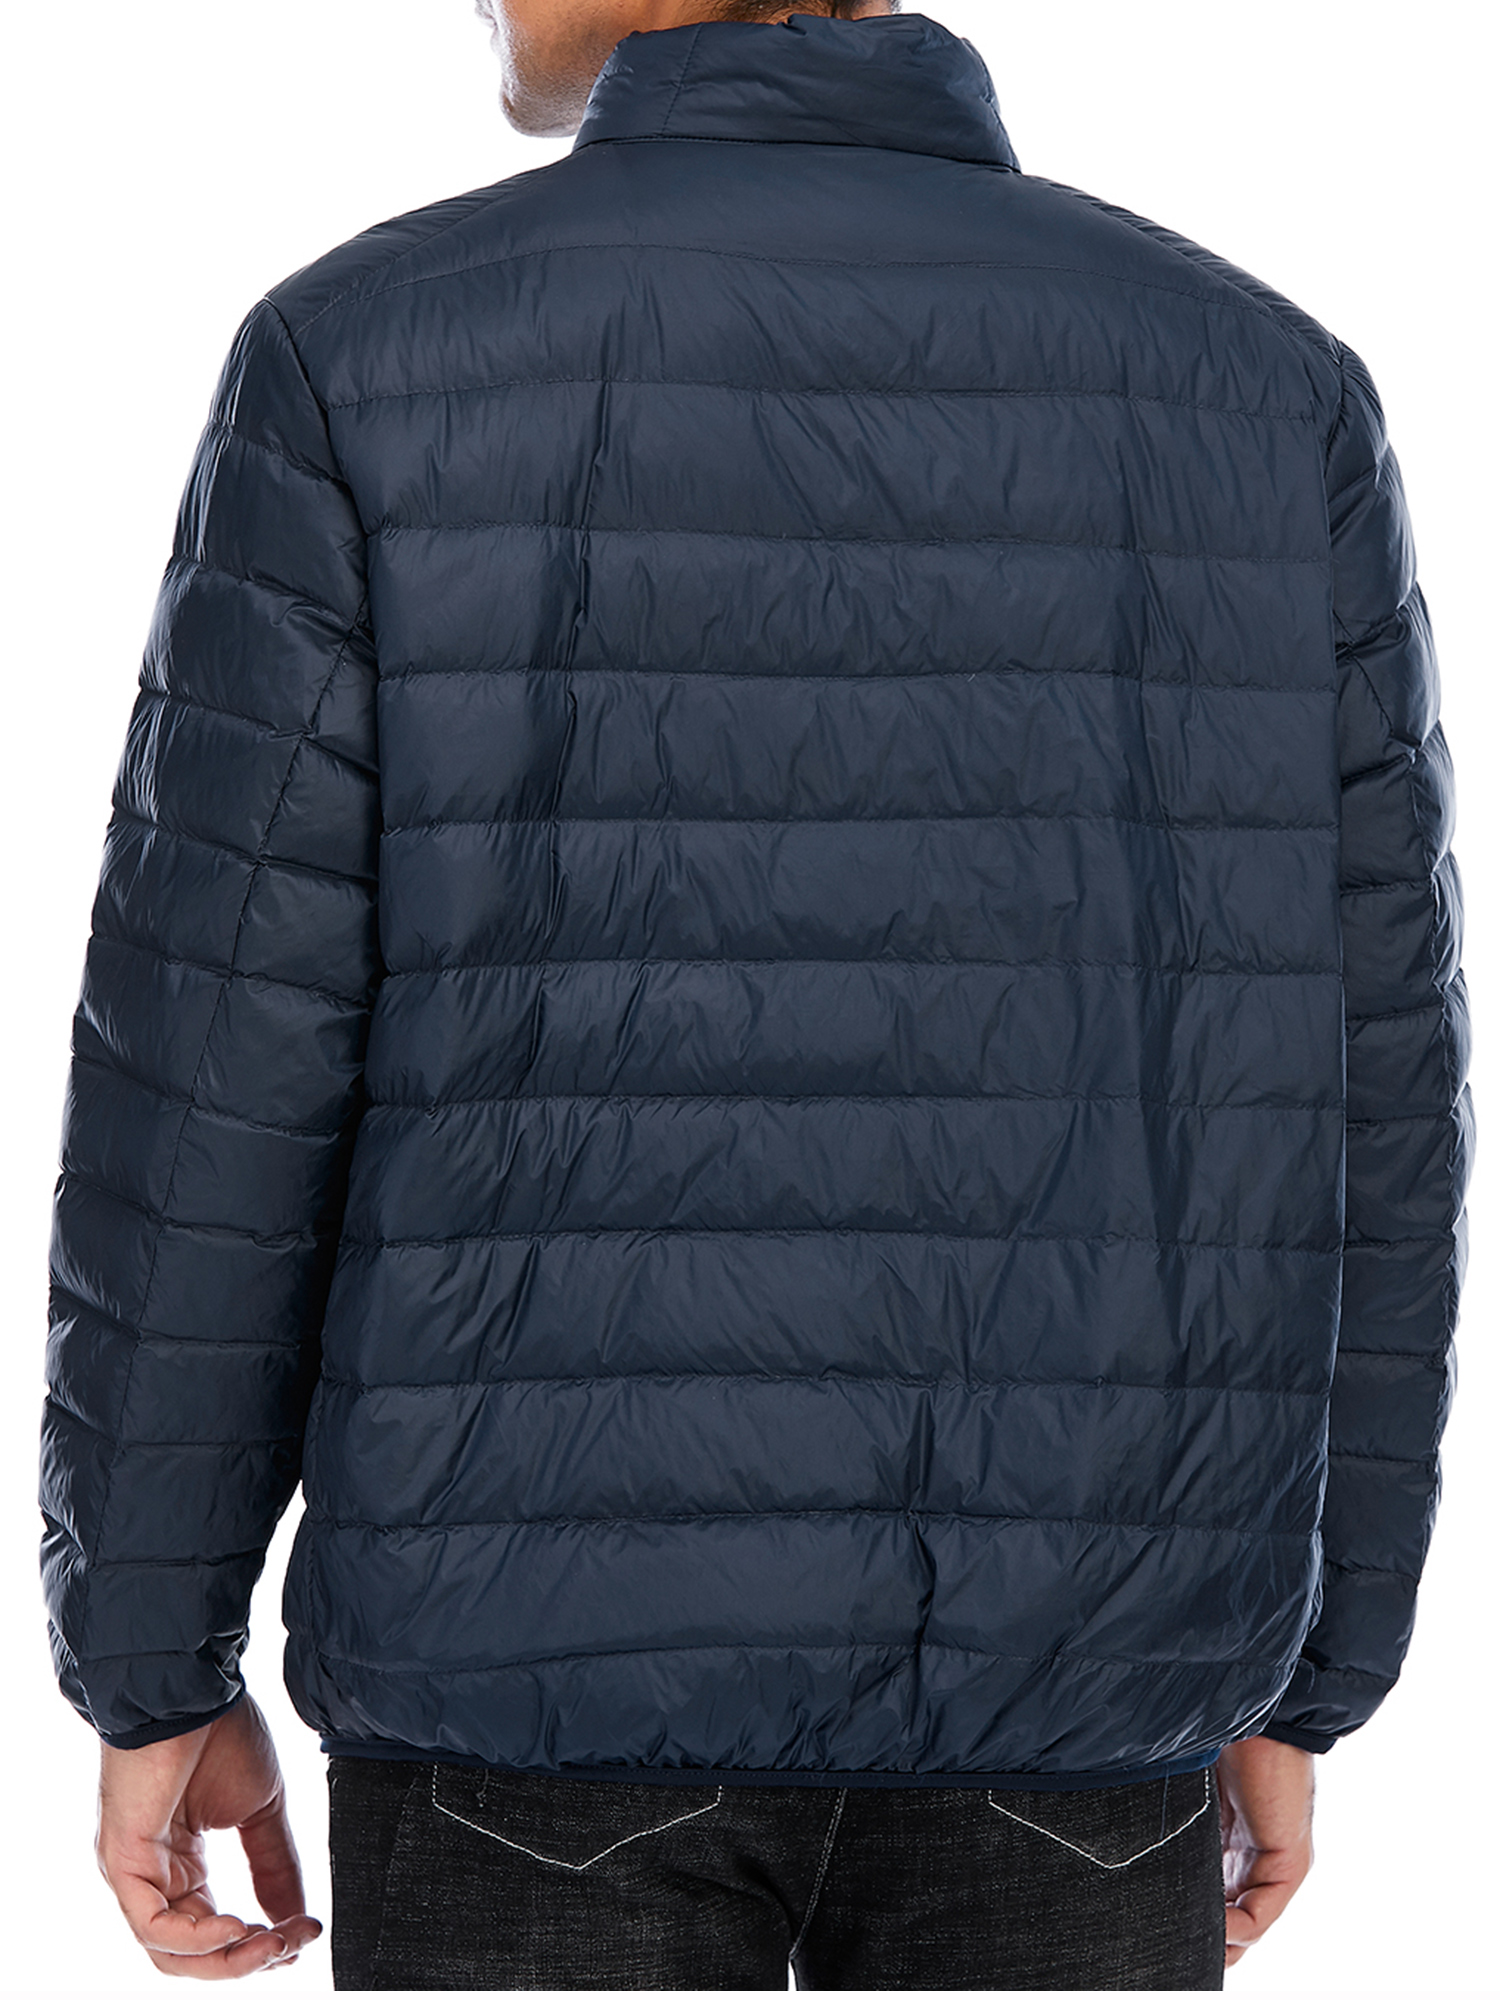 FOCUSSEXY Mens Down Jacket, Light Weight Puffer Coat for Men, Men's Down Puffer Jacket Packable Puffer Jacket Windproof Zip Up Warm Coat Outerwear - image 2 of 7